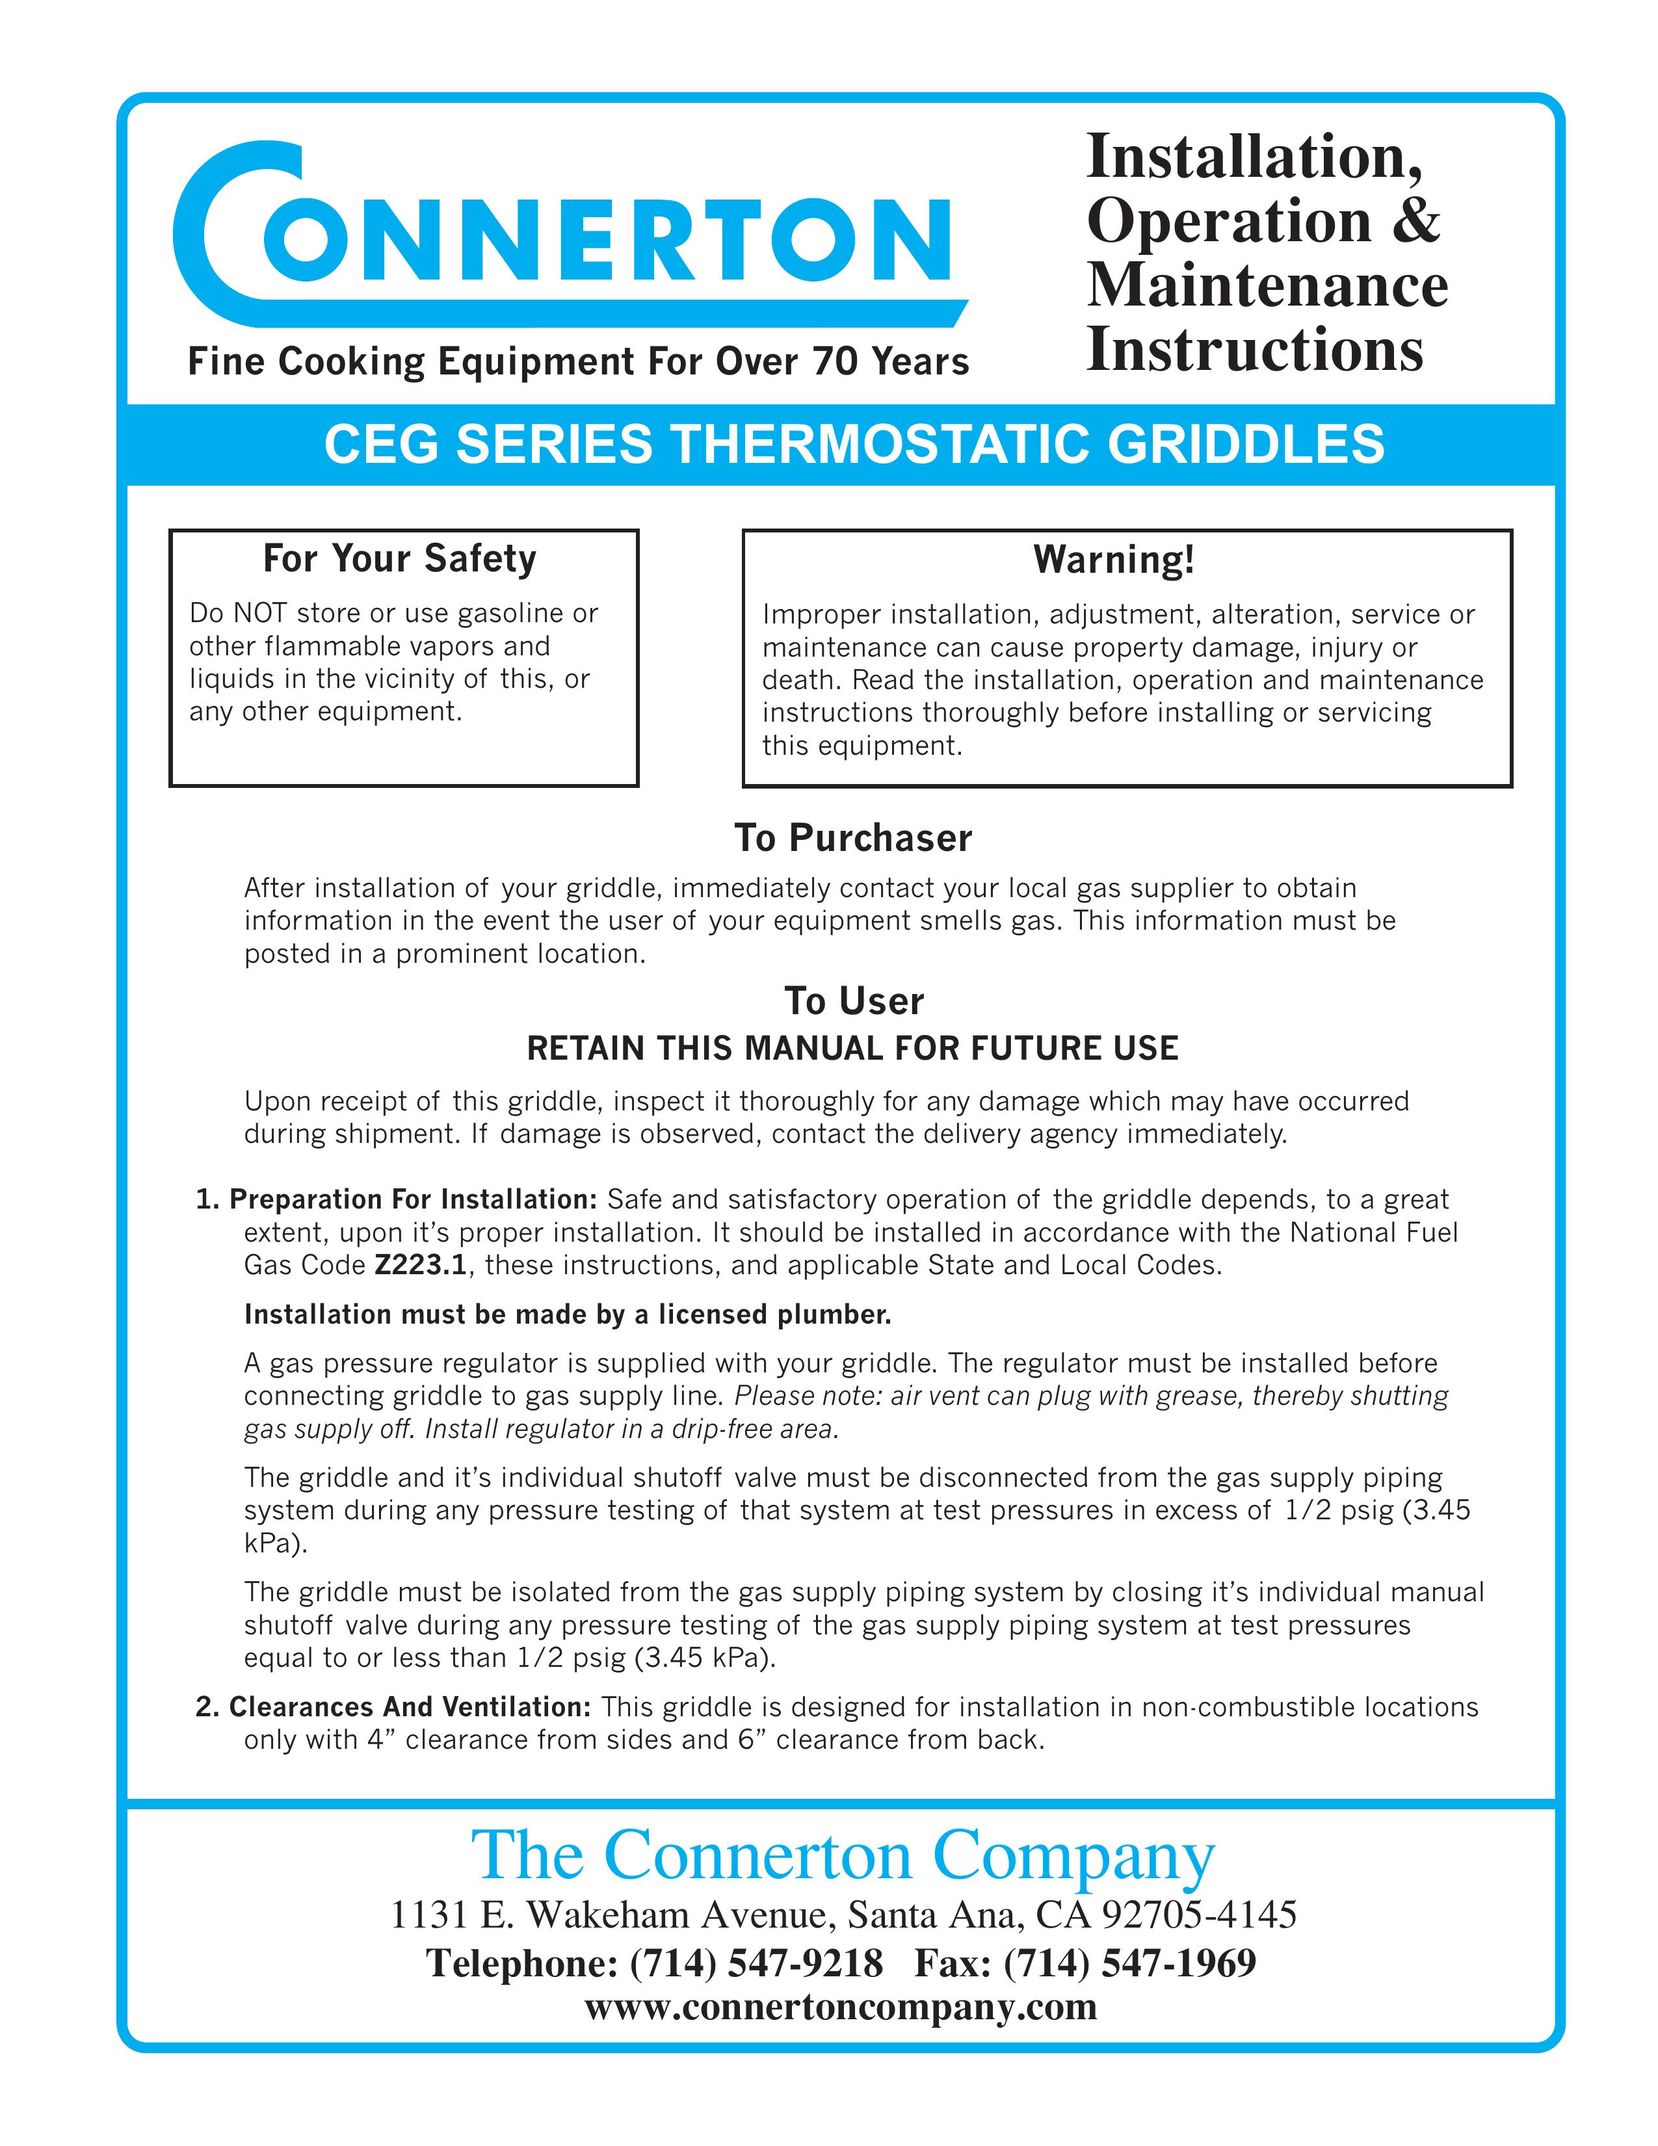 Connerton Co CEG SERIES Griddle User Manual